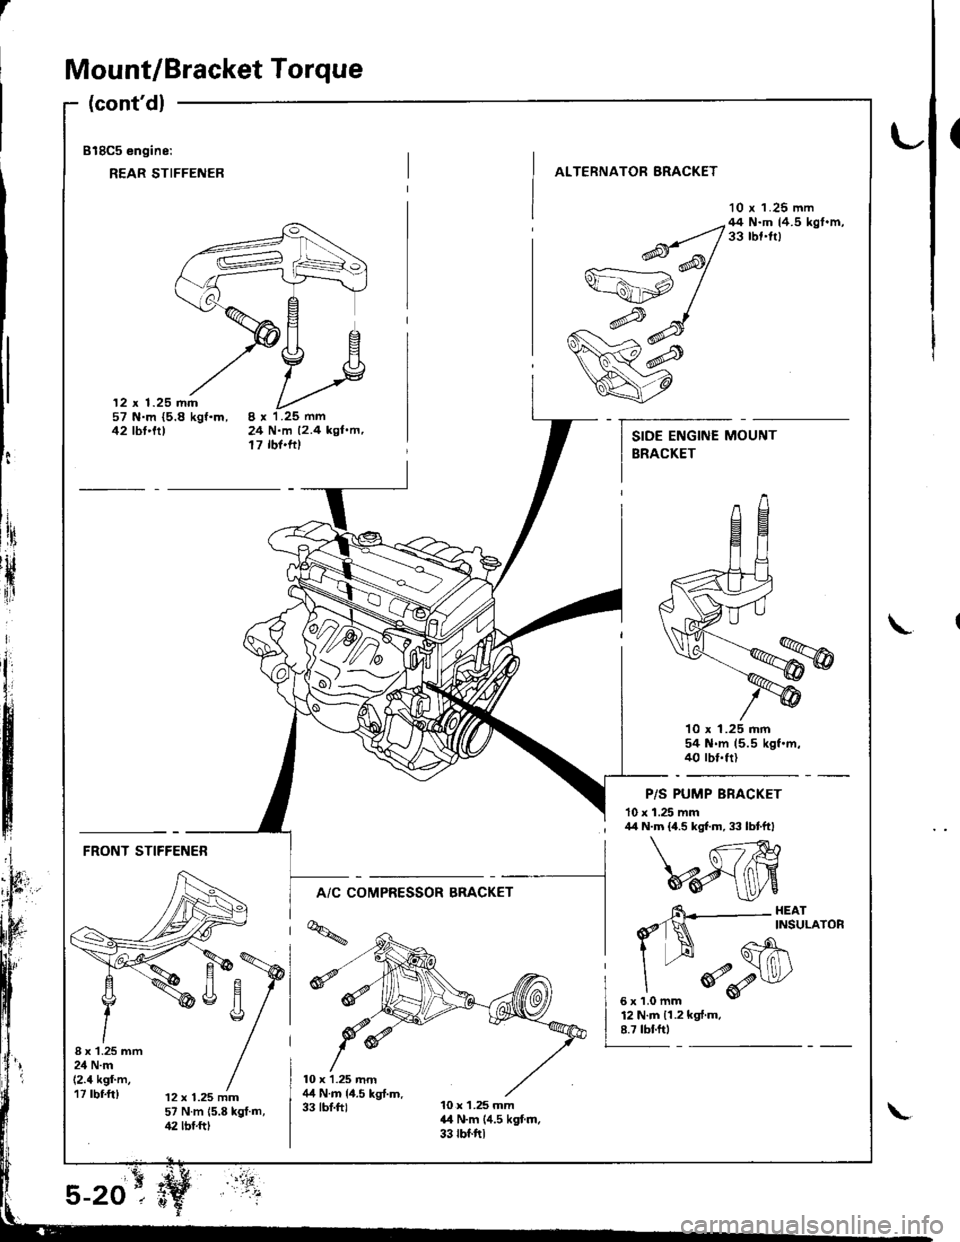 HONDA INTEGRA 1998 4.G Workshop Manual I
Mount/Bracket Torque
(contdl
818C5 engine:
REAR STIFFENER
(
ALTERNATOR BRACKET
10 r 1.25 mm
12 x 1.25 mm57 N.m {5.8 kgf.m,42 tbttrt24 N.m 12.4 kgl.m,17 rbfftt
--q;;/44Nmtr.5kstmv=ahp /
w#
q7
1